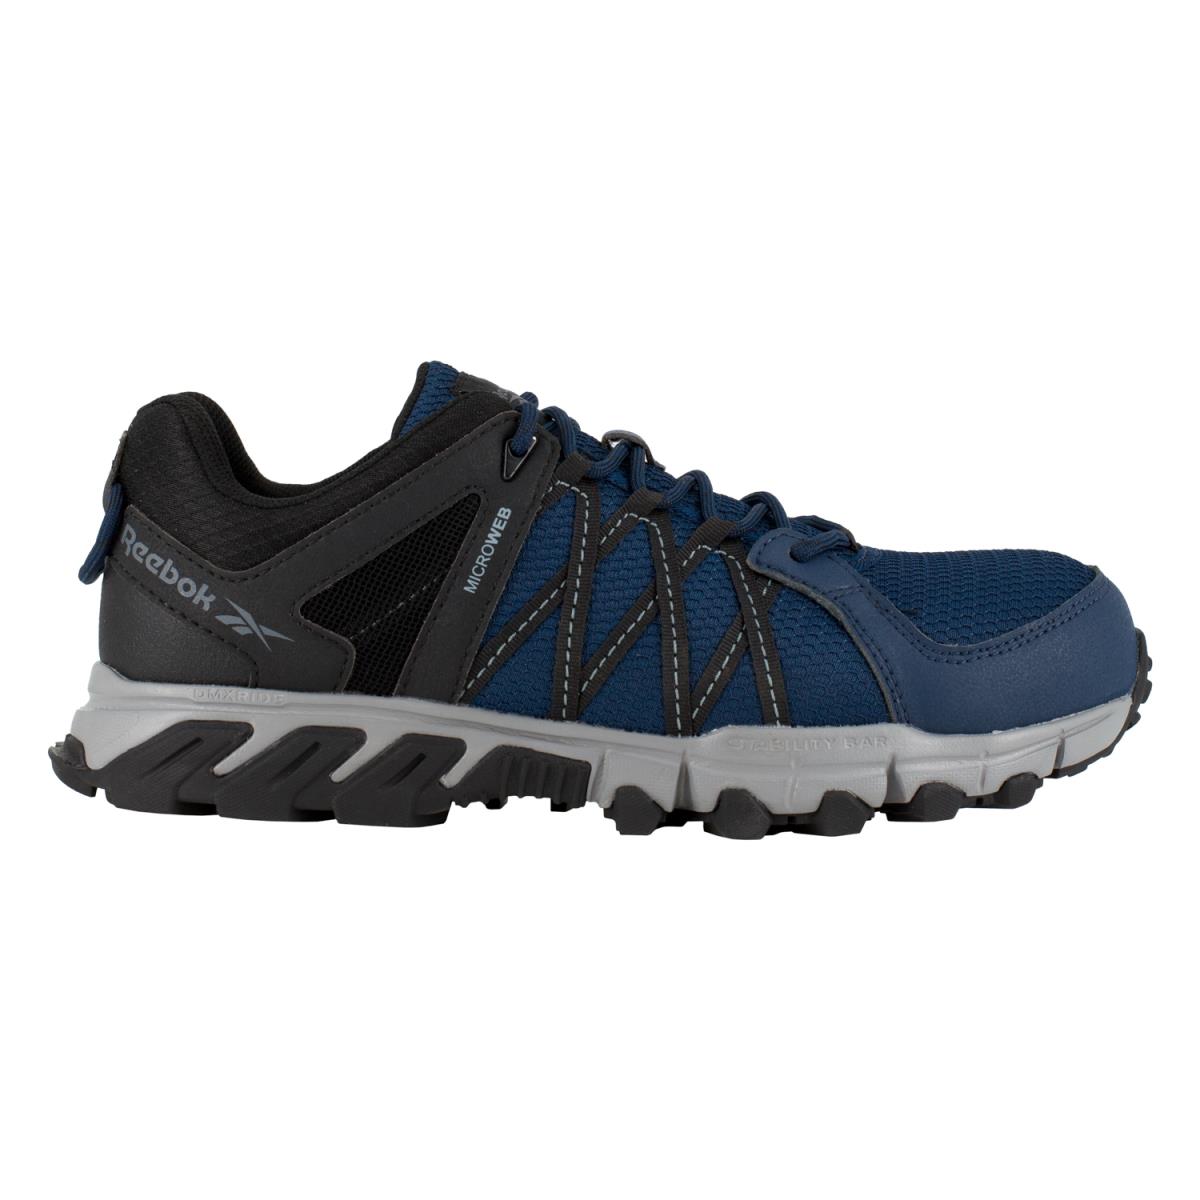 Reebok Mens Navy/black Textile Work Shoes Trailgrip Athletic CT M